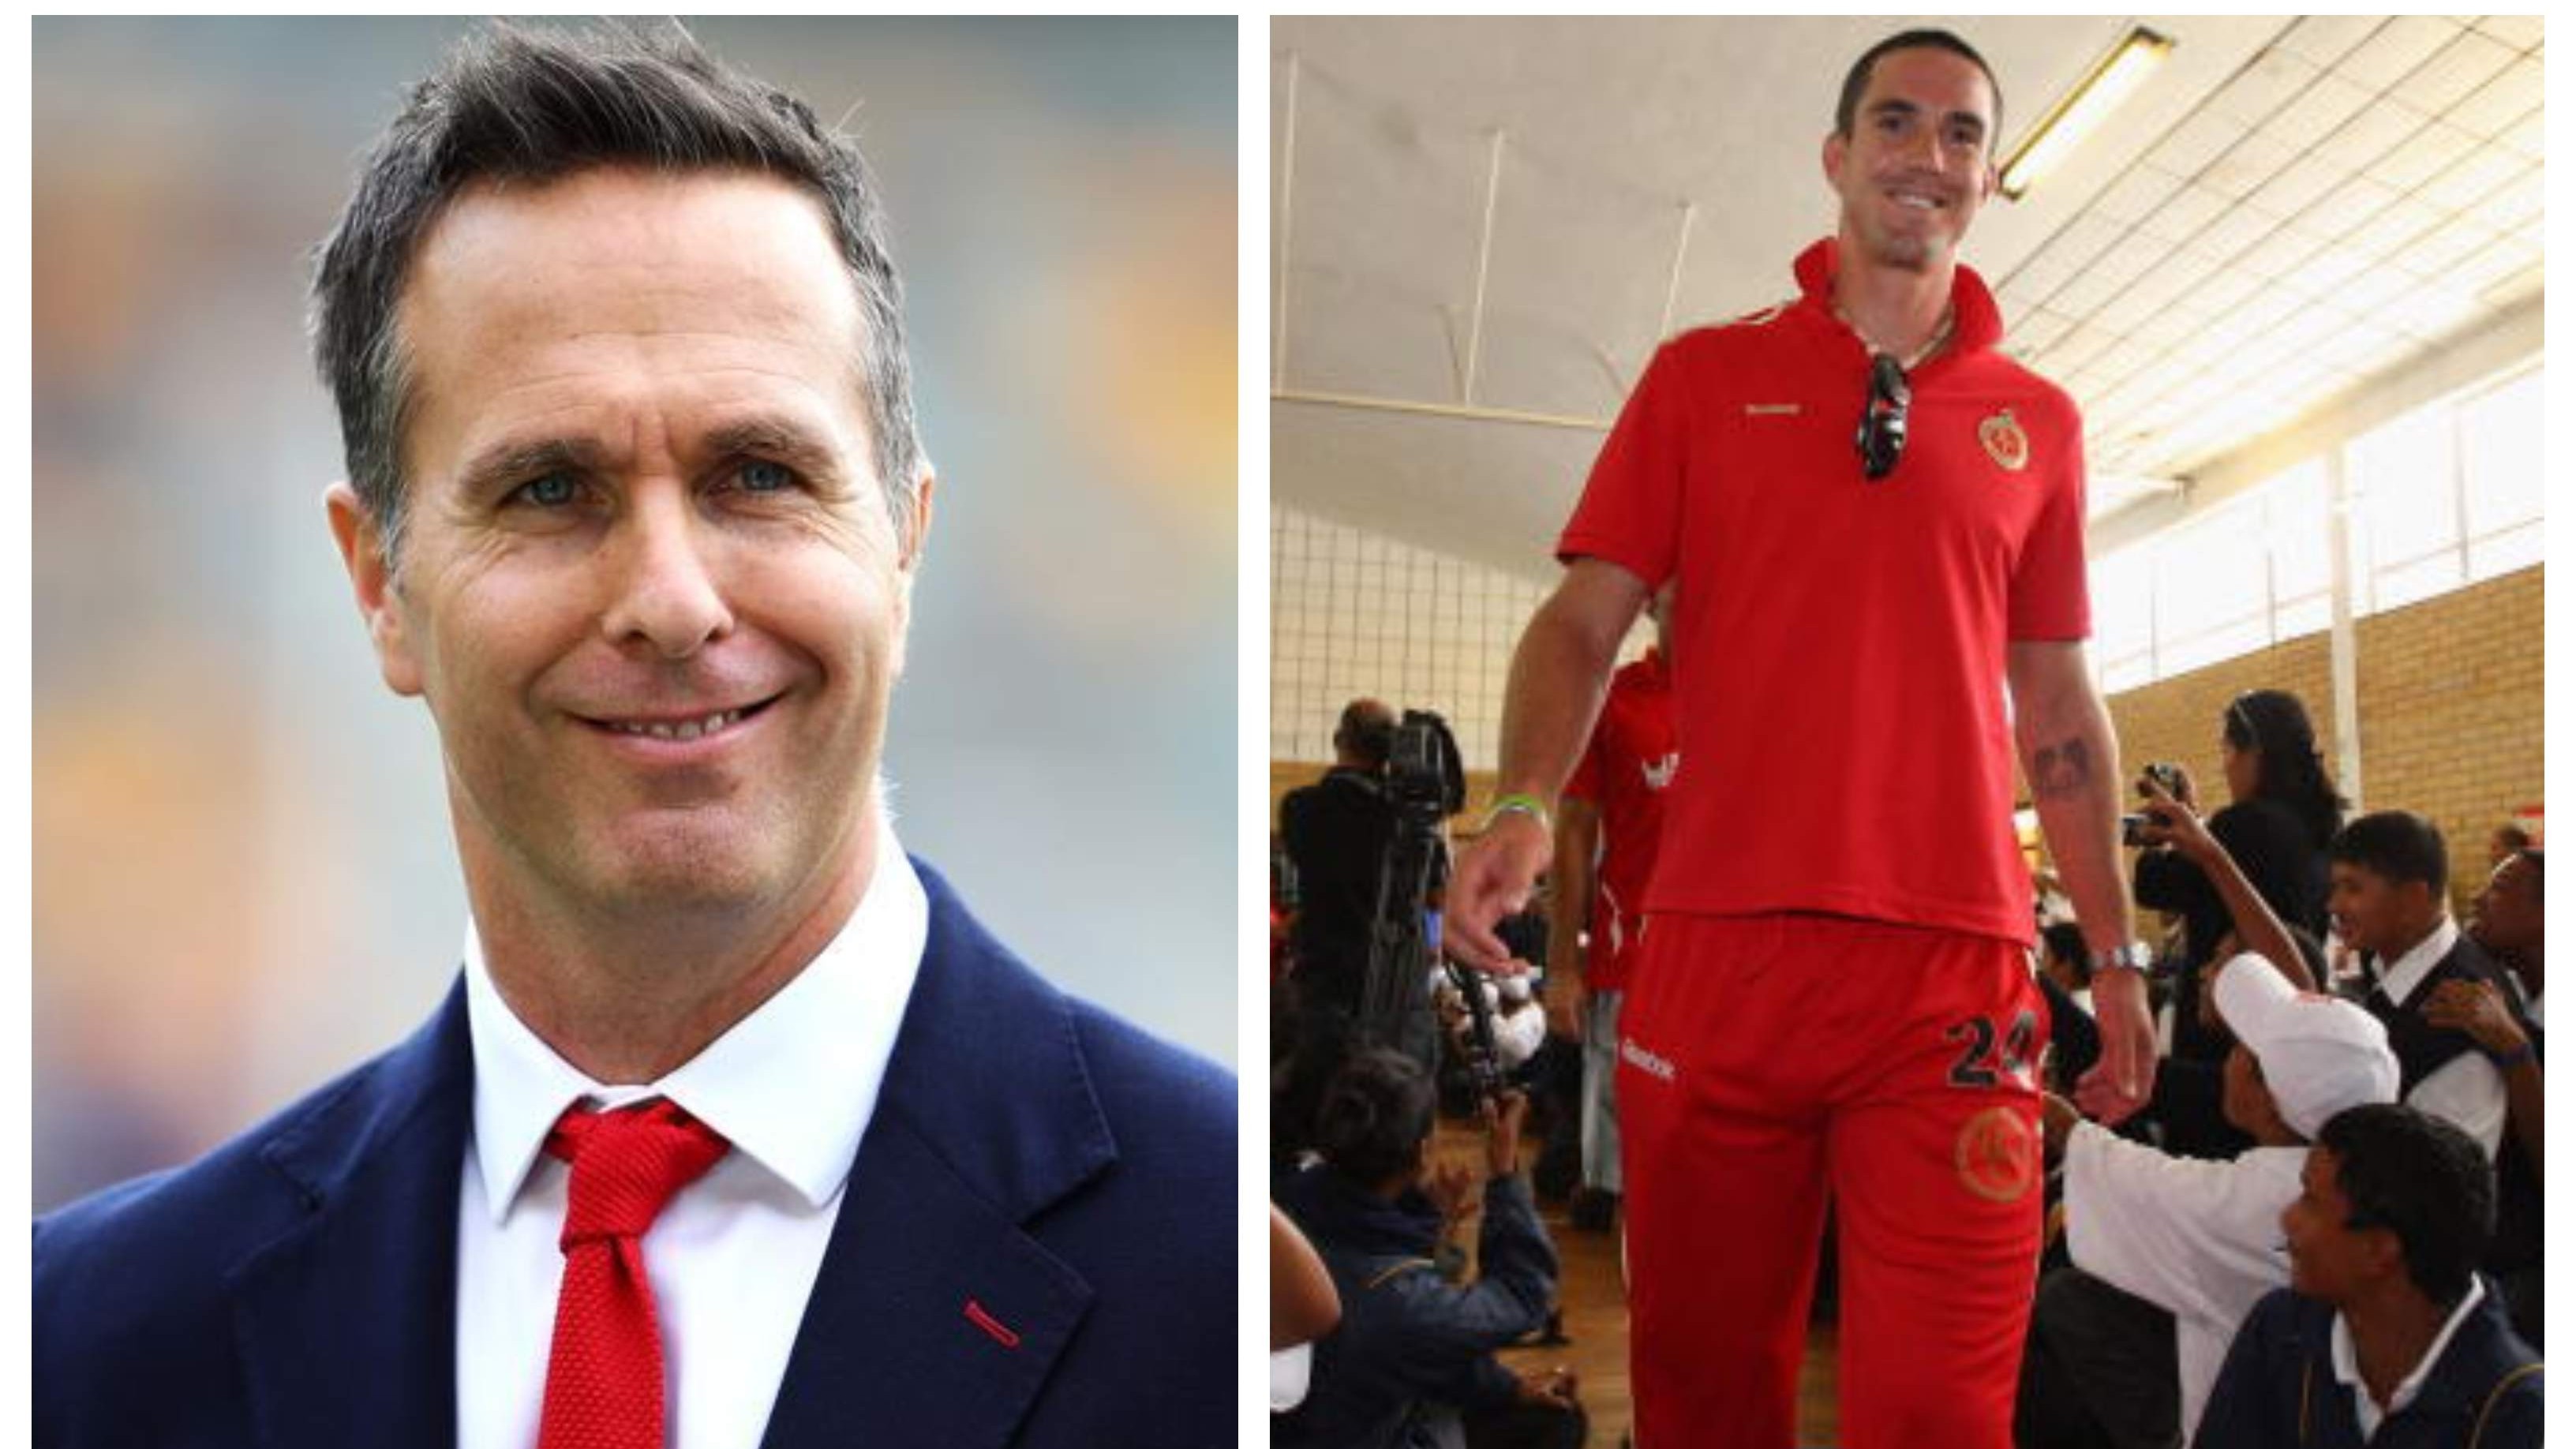 Pietersen’s England teammates were jealous of his lucrative IPL contract, claims Michael Vaughan